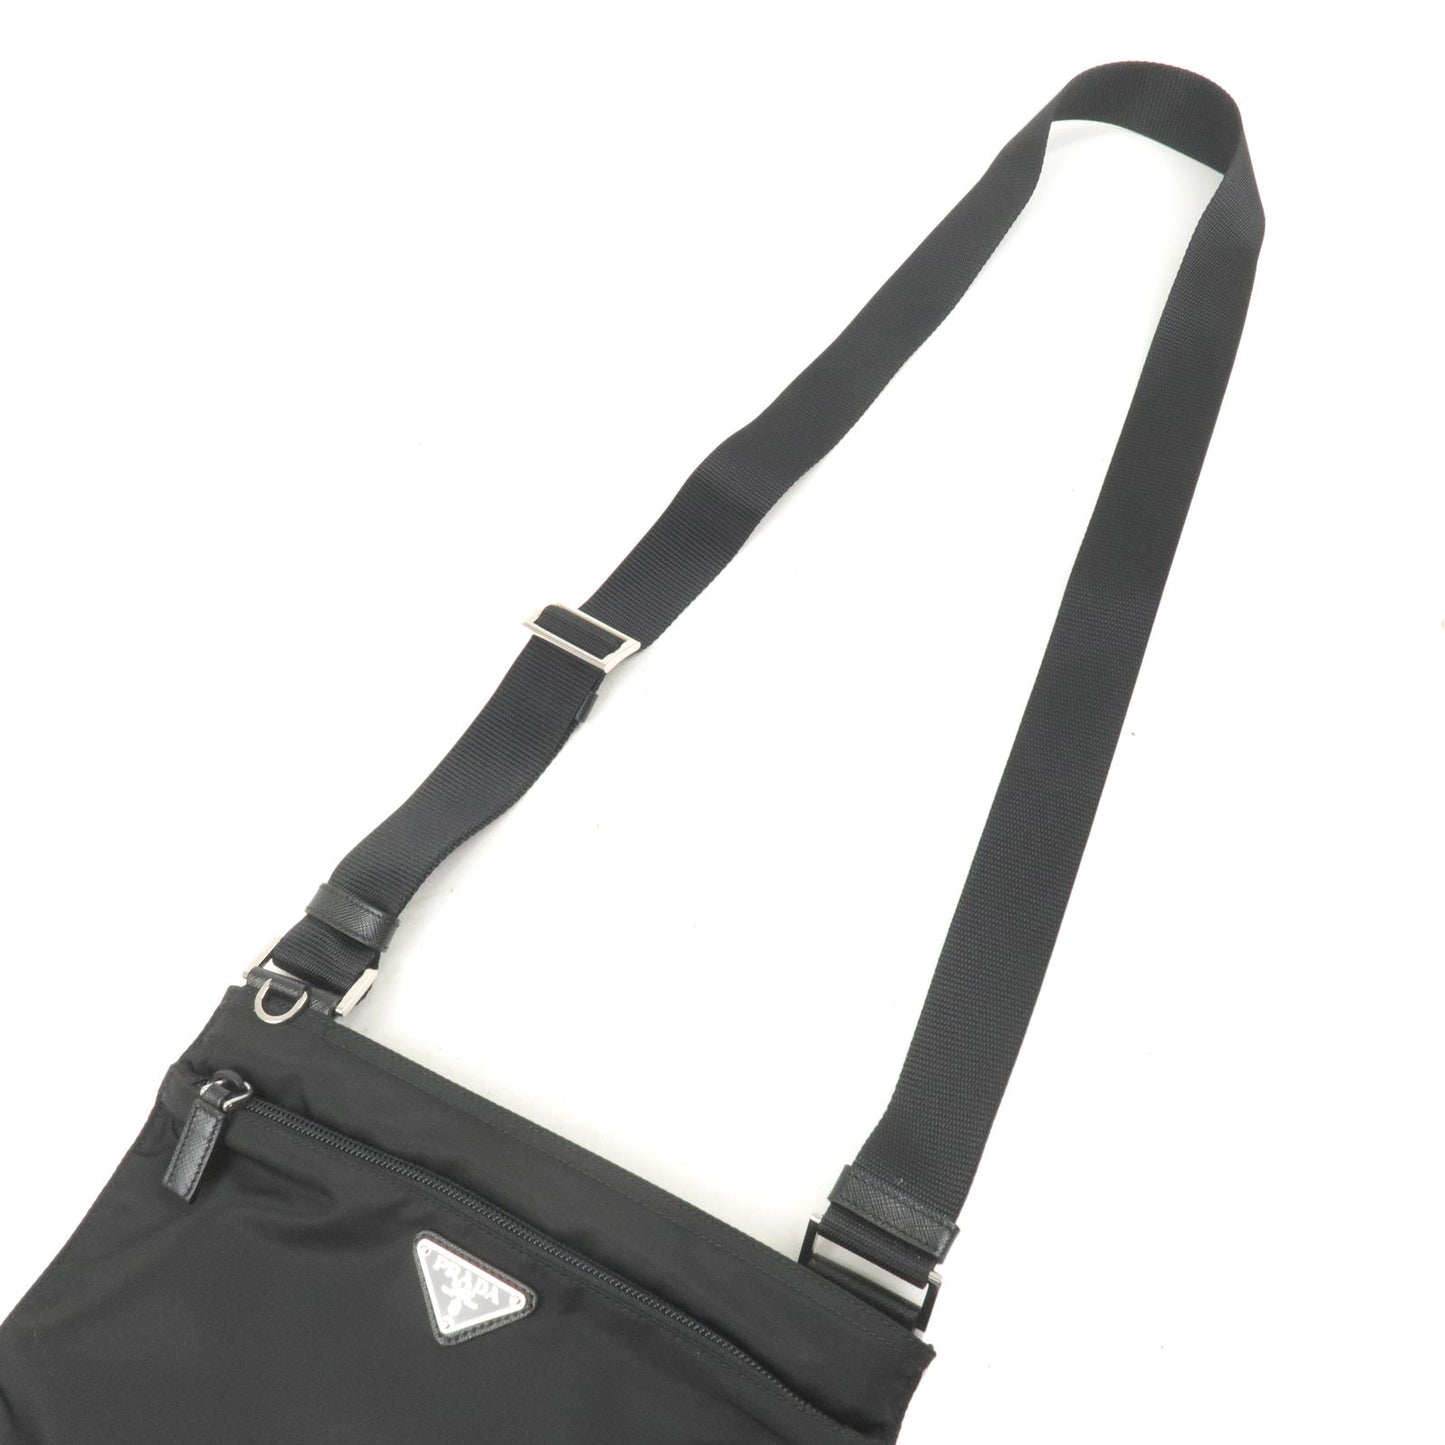 PRADA Logo Nylon Leather Shoulder Bag Purse NERO Black 1BH978